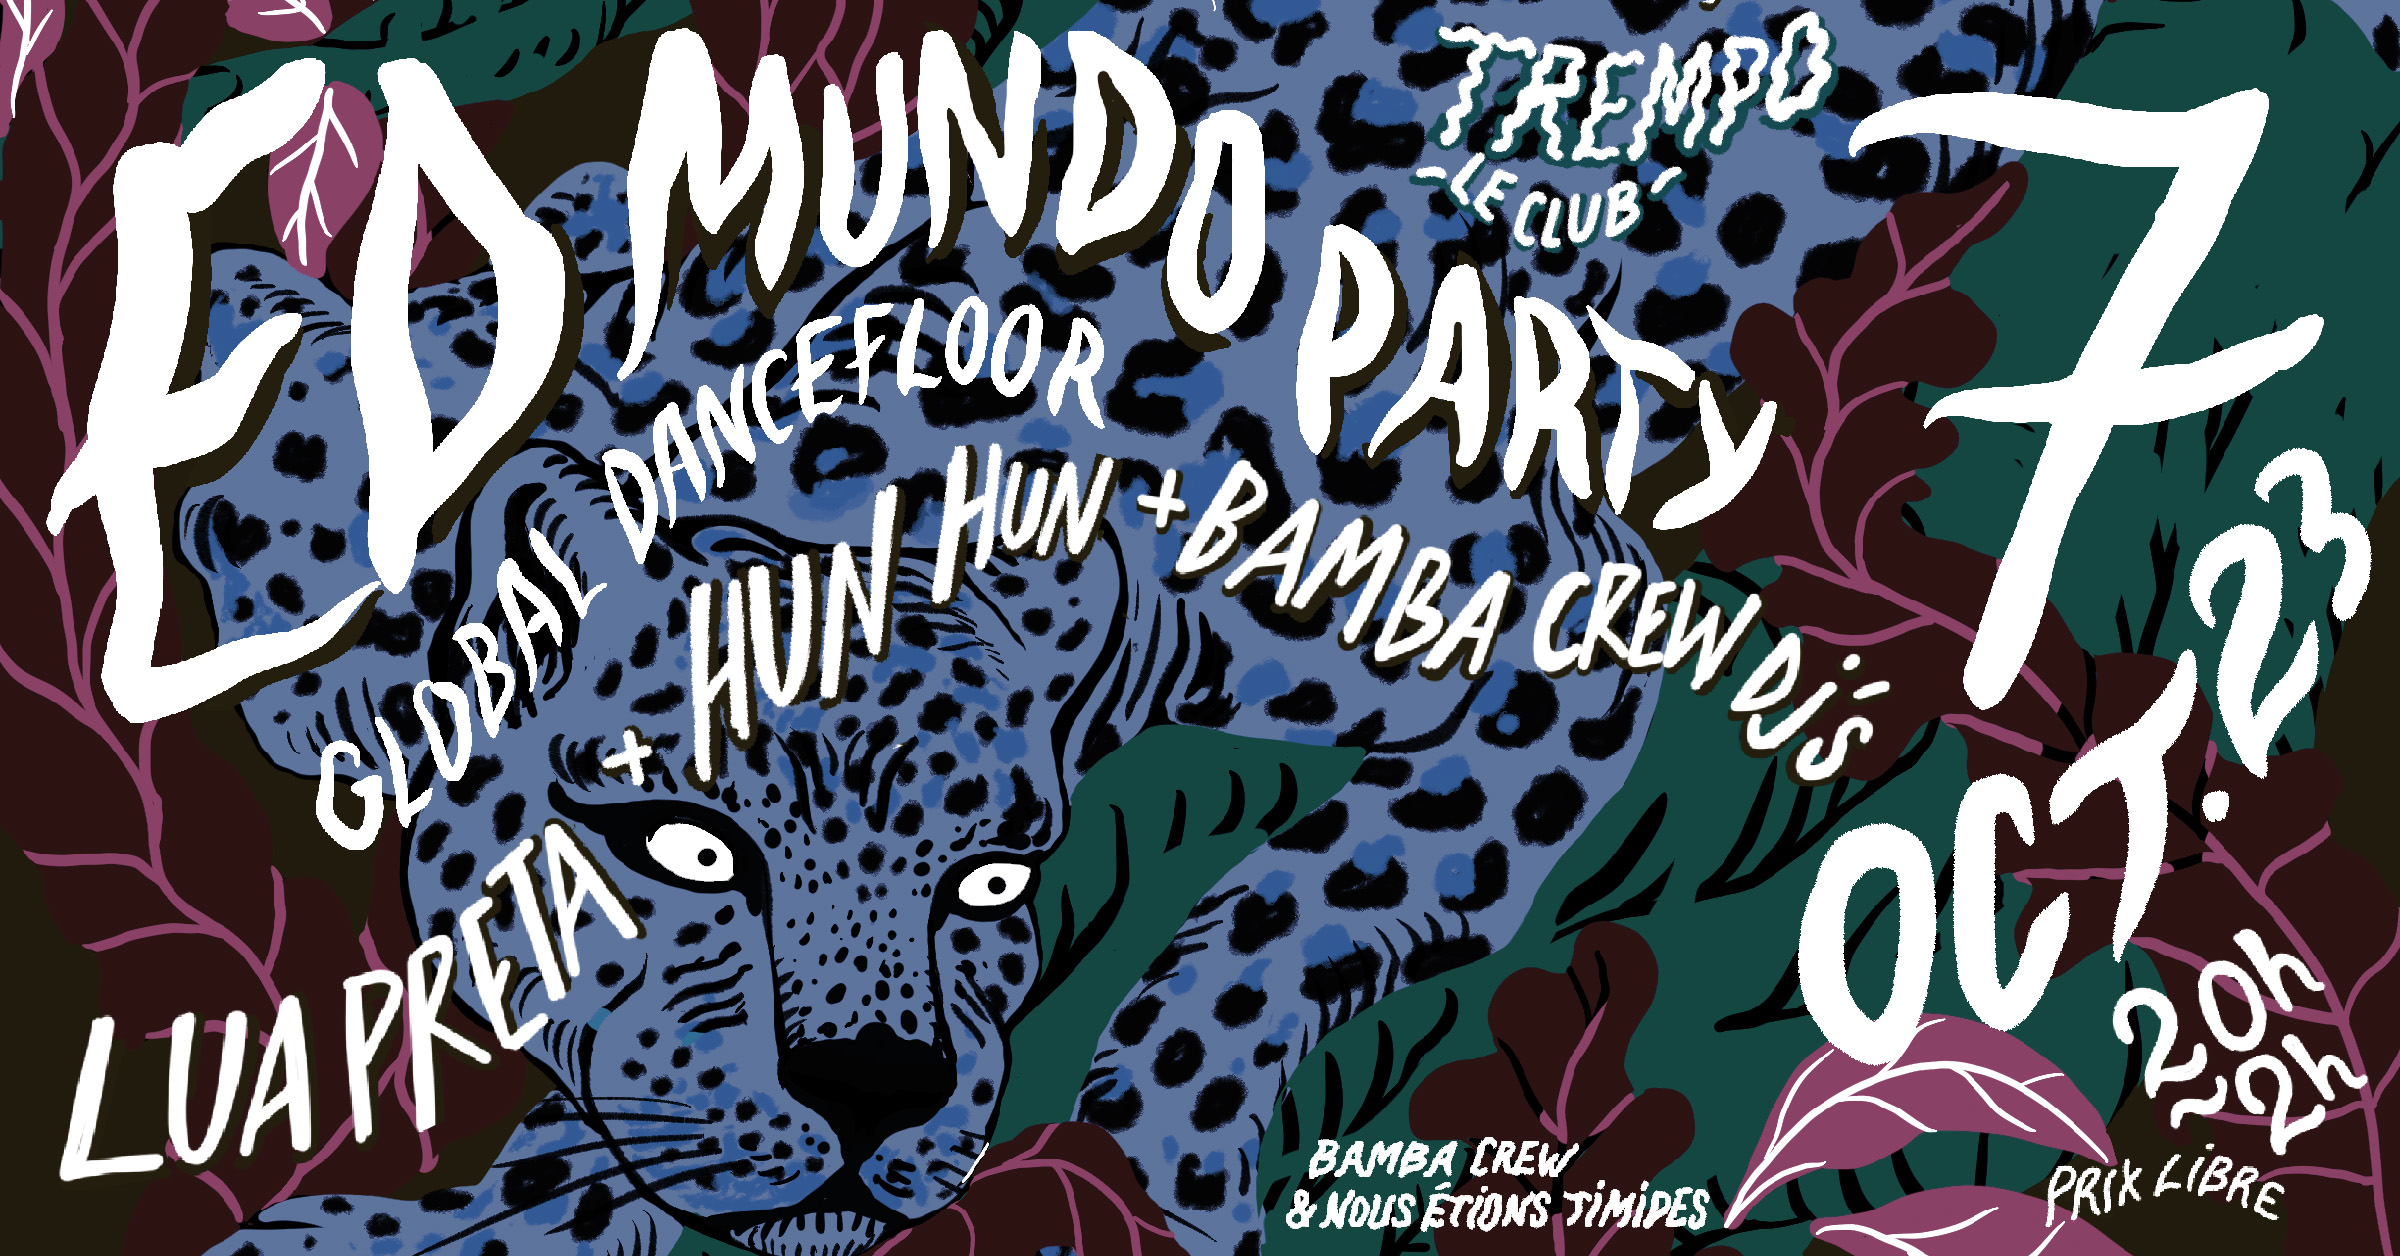 Ed Mundo Party : Lua Preta + Hun Hun + Bamba Crew